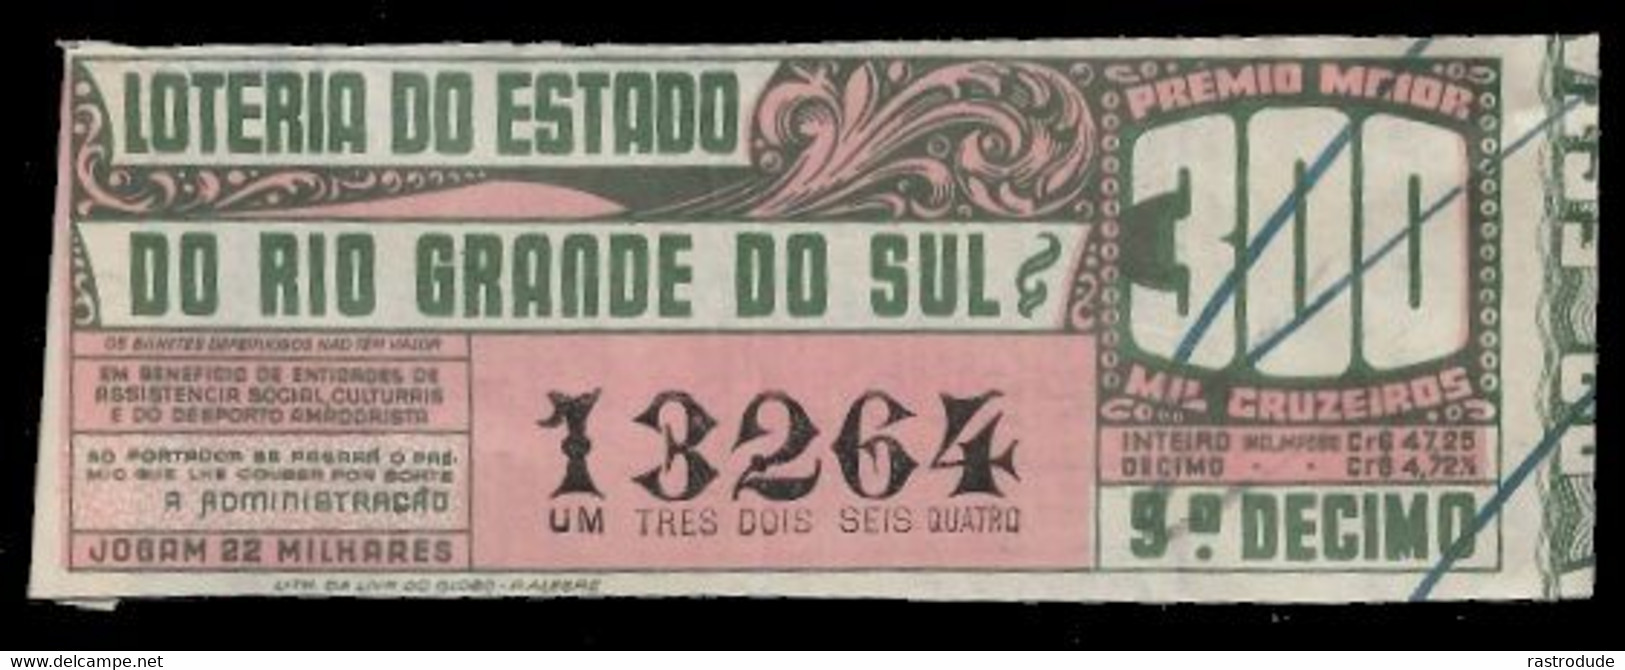 1947 BRAZIL BRASIL - LOTTERY TICKET BILHETE DE LOTERIA DO ESTADODO RIO GRANDE DO SUL - Lottery Tickets